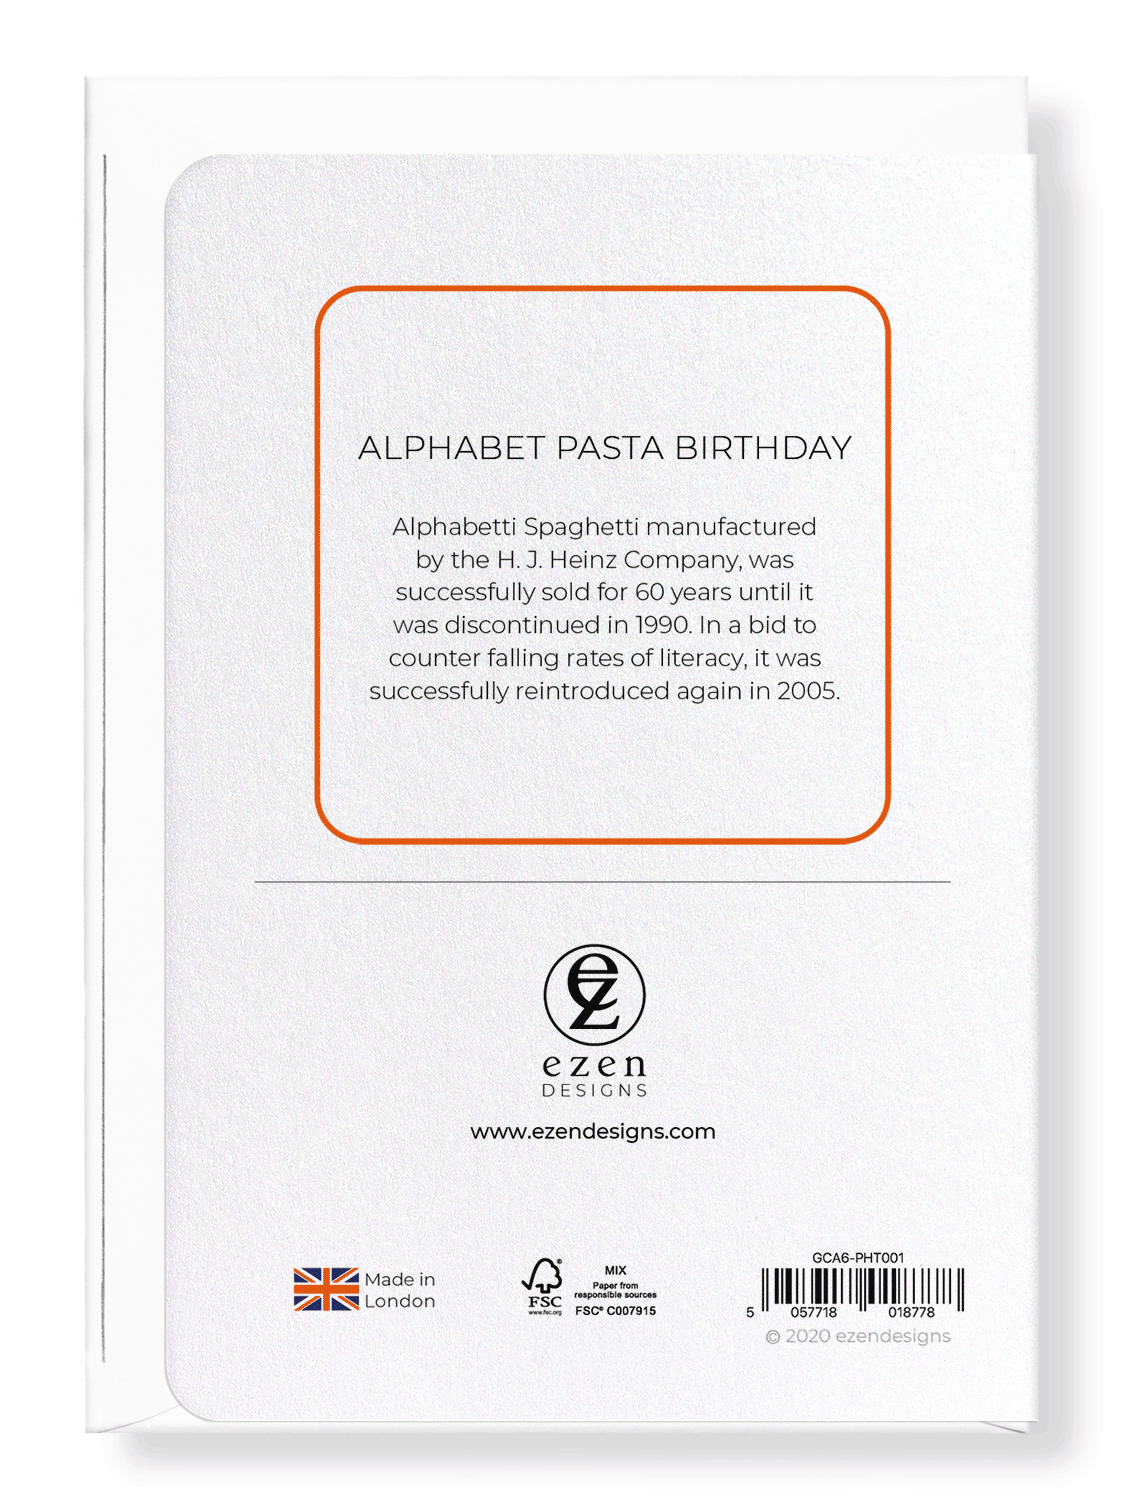 Ezen Designs - Alphabet pasta birthday - Greeting Card - Back